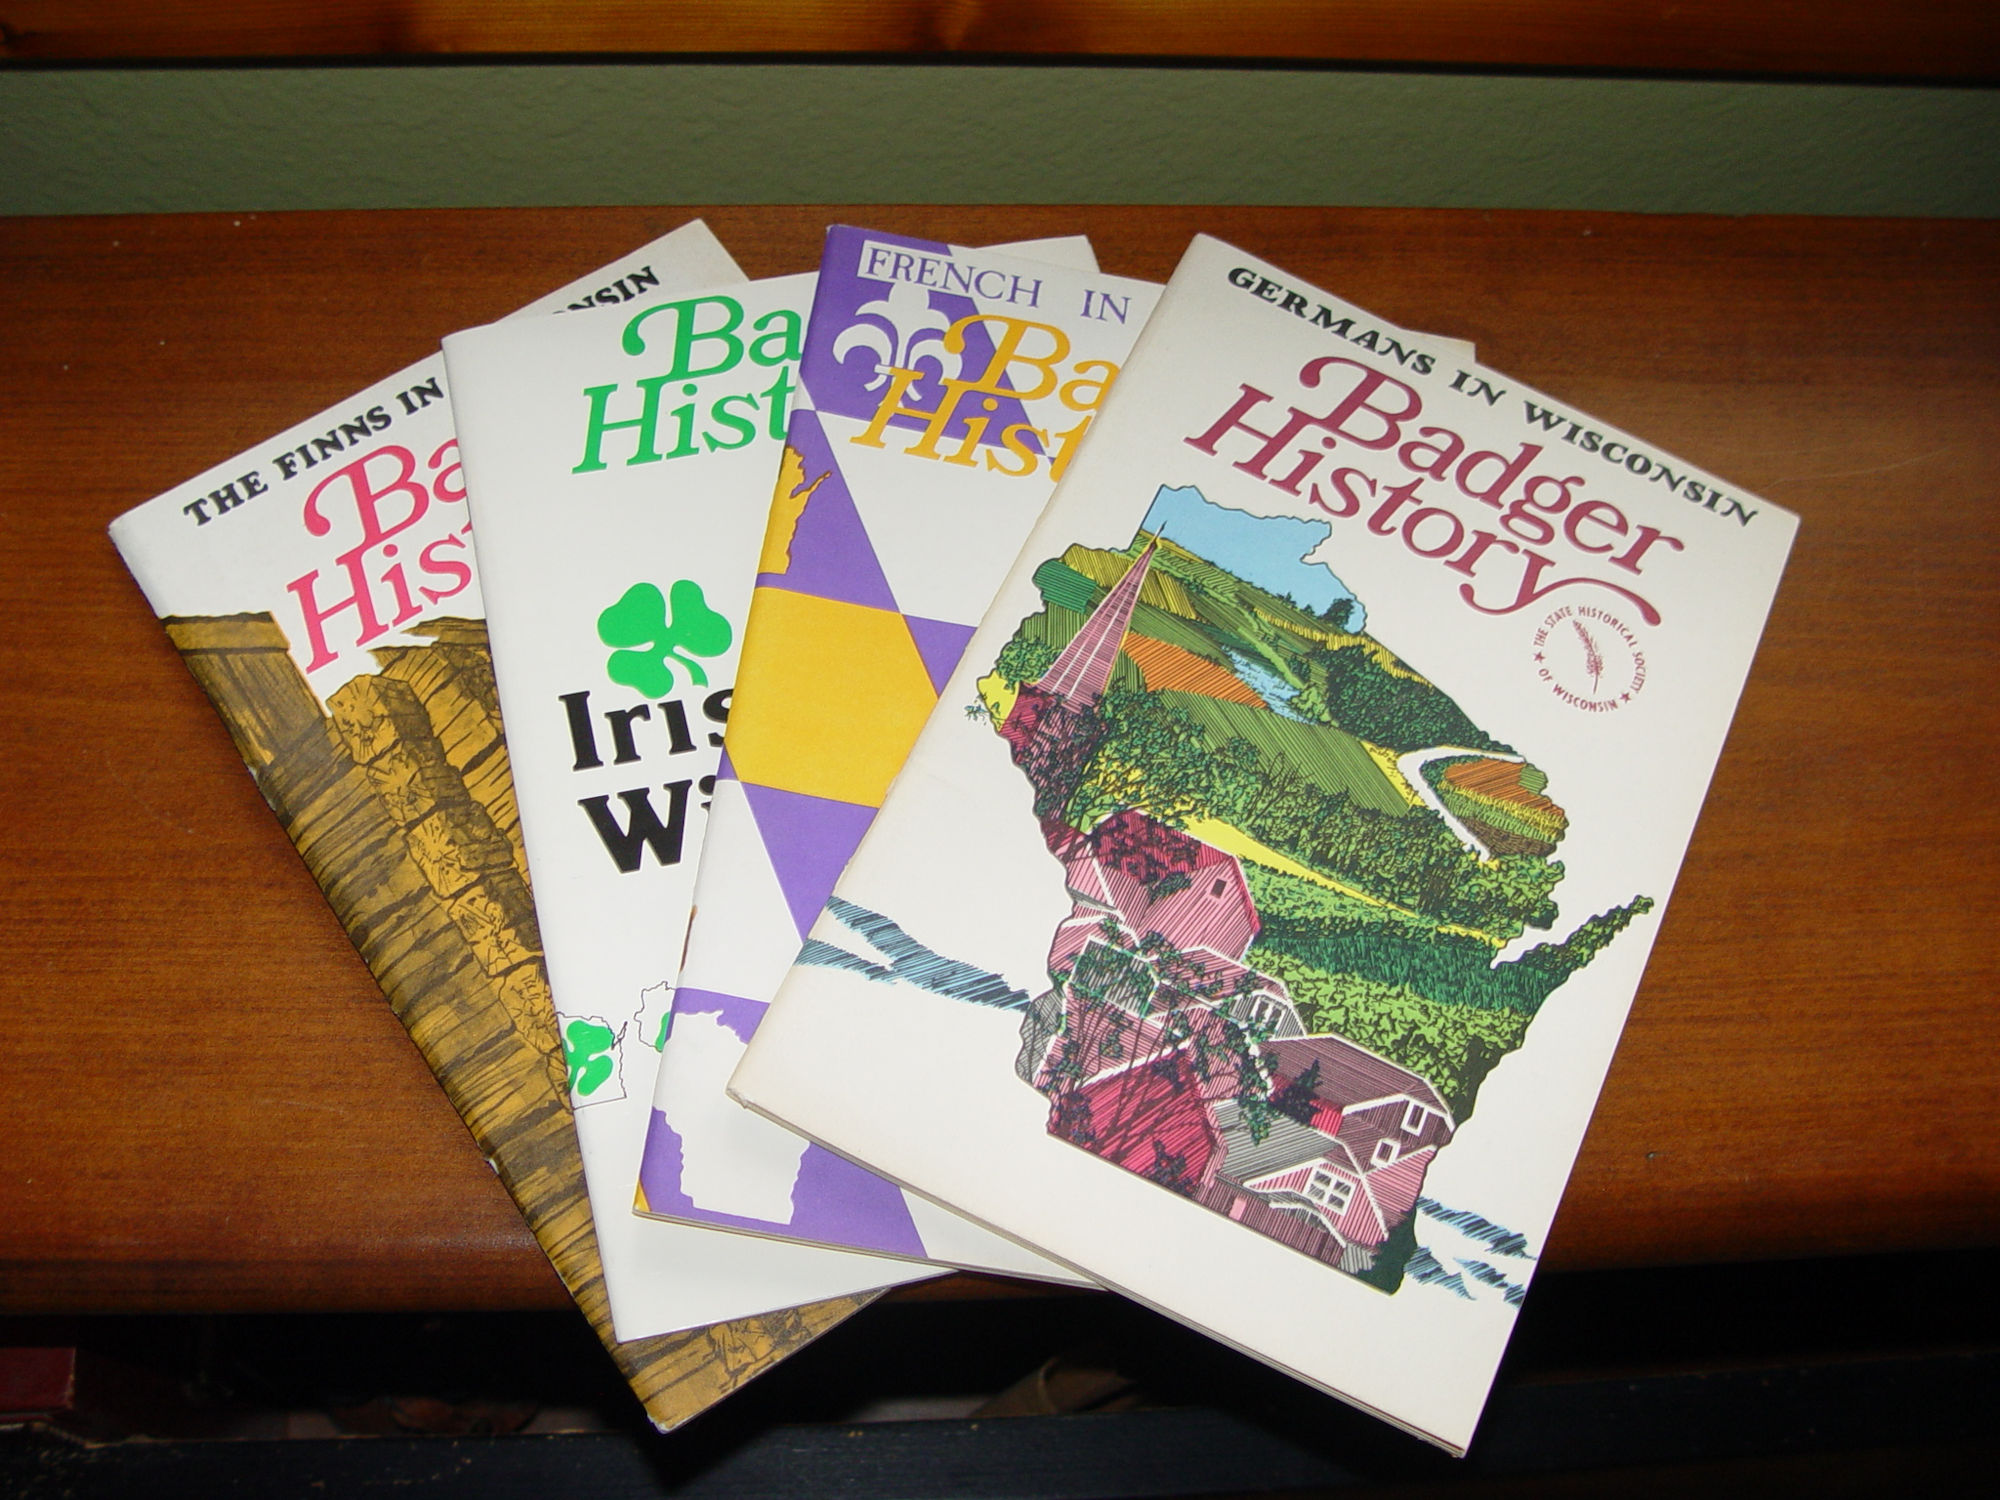 Badger History (Wisconsin) Germans, French,
                        Irish & Finns Lot of 4 Books